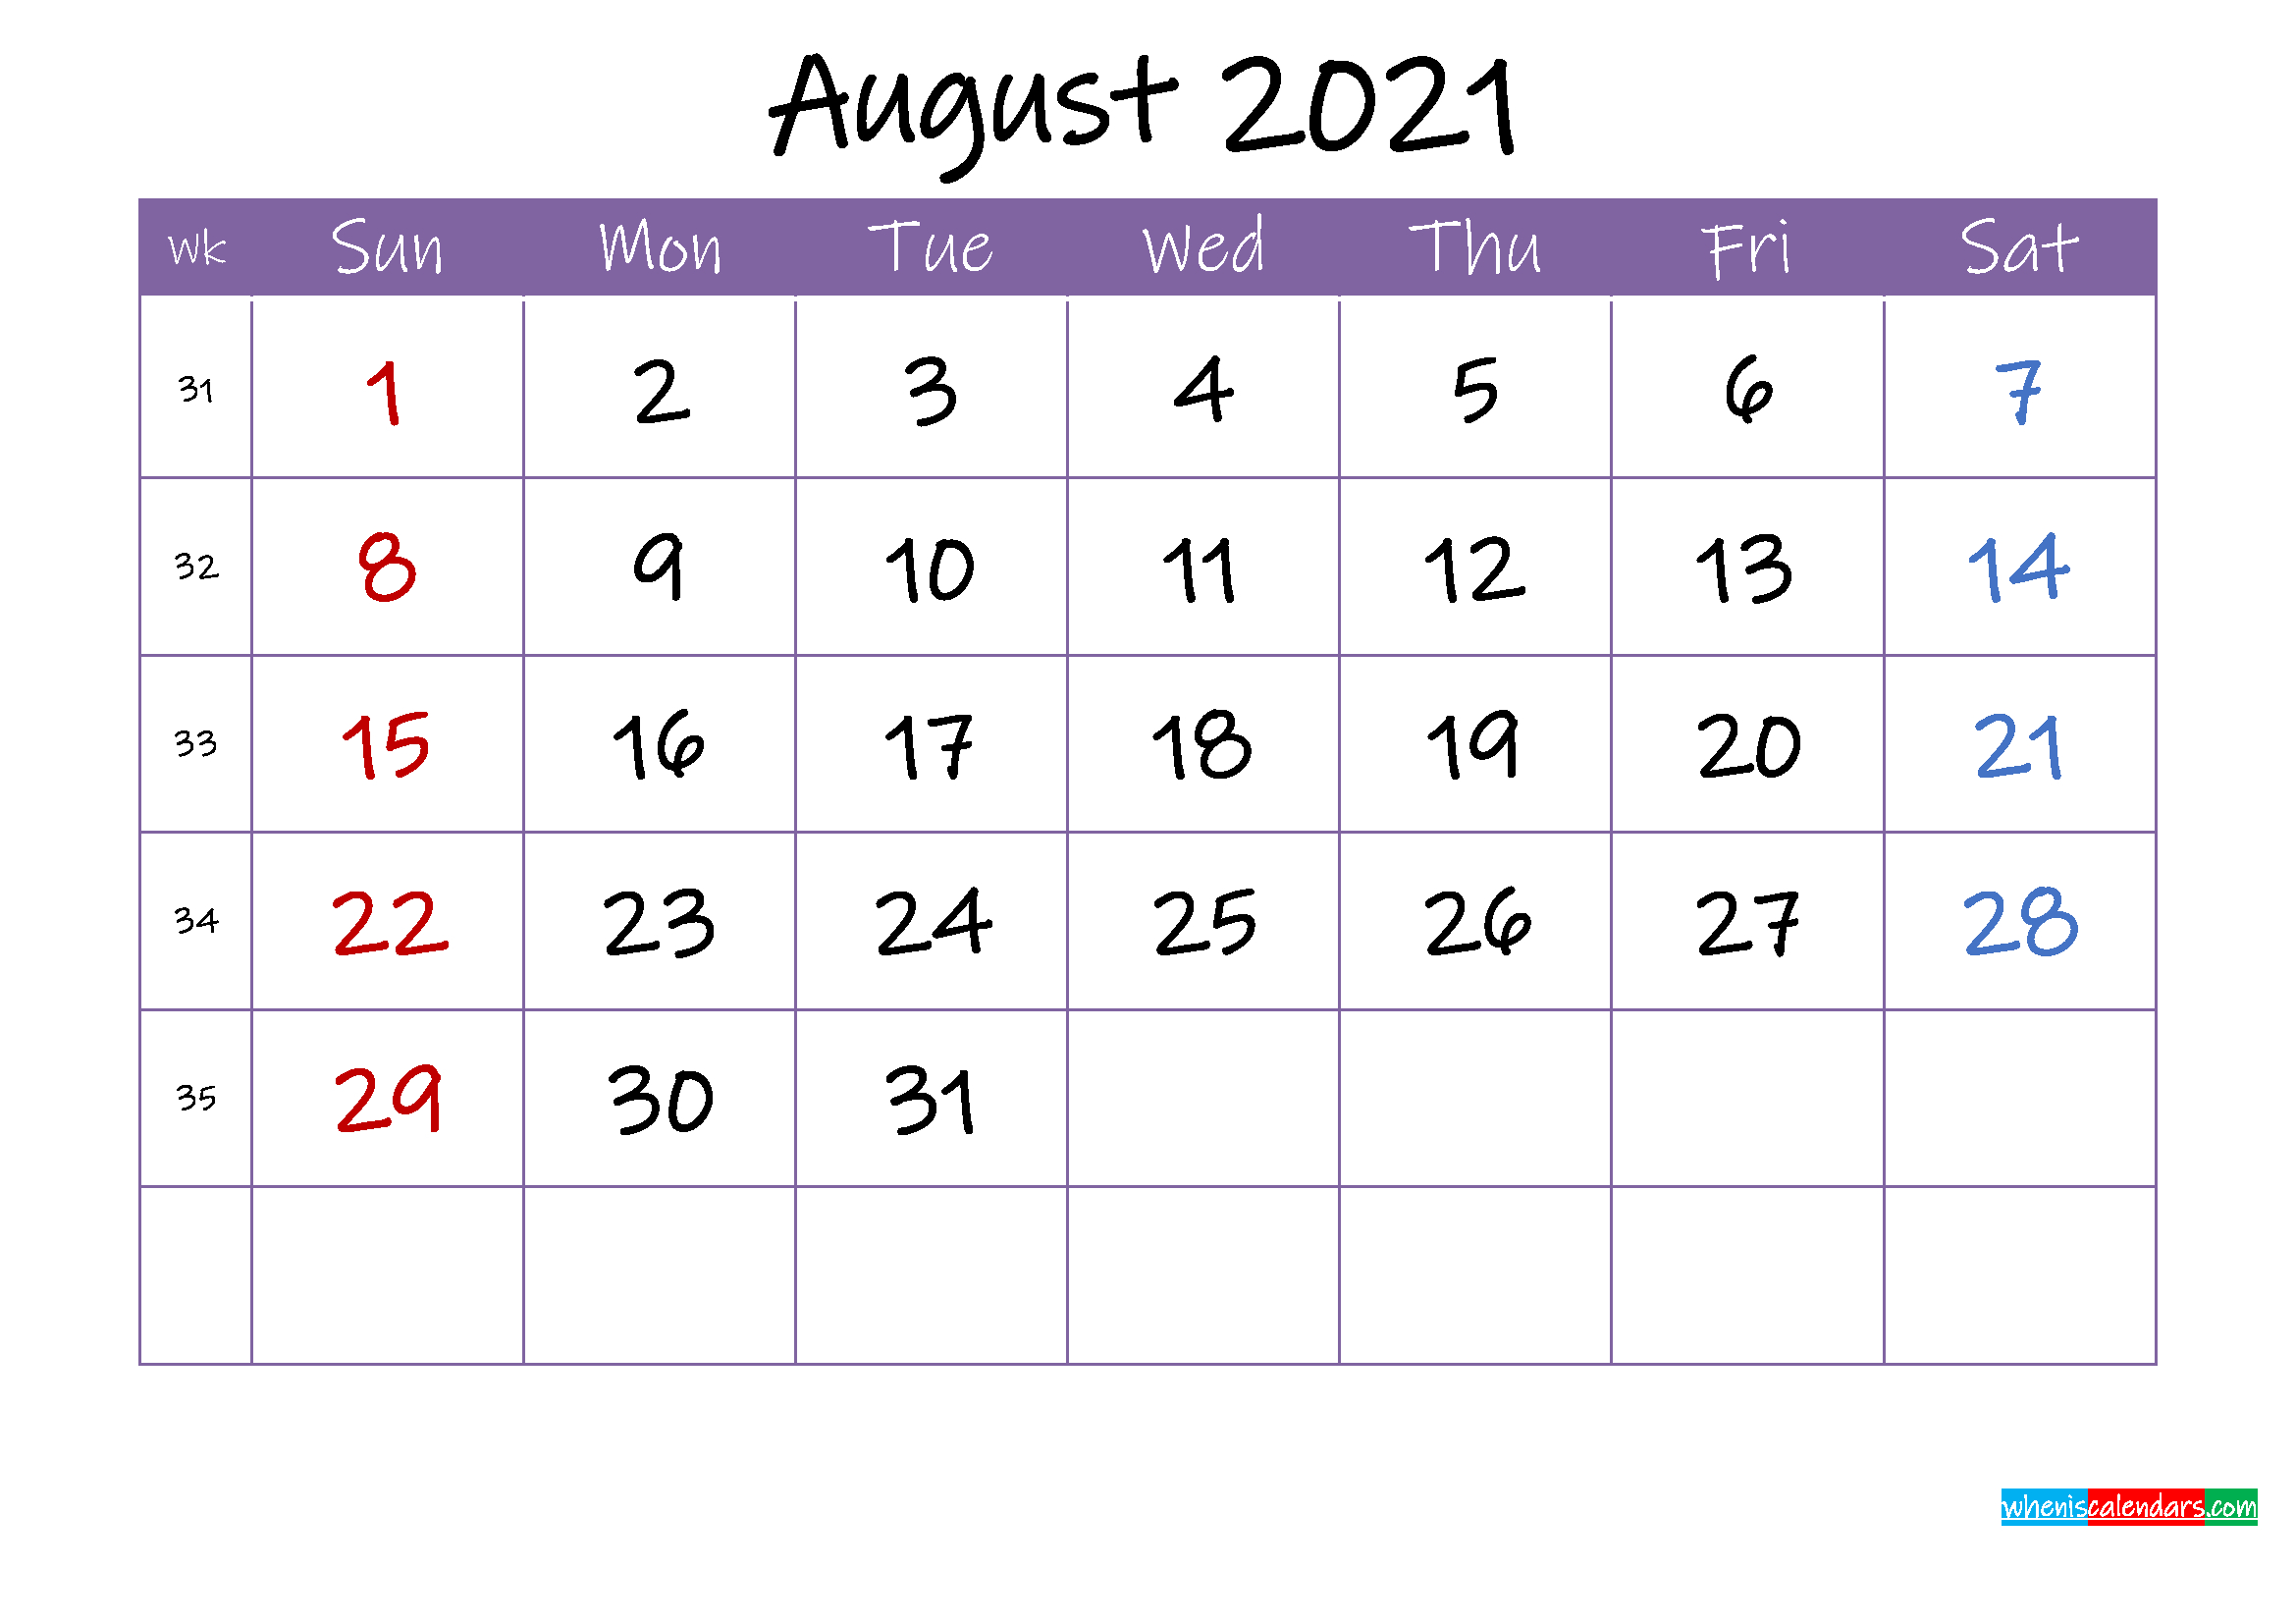 August 2021 Calendar With Holidays Printable - Template-August 2021 Calendar Printable